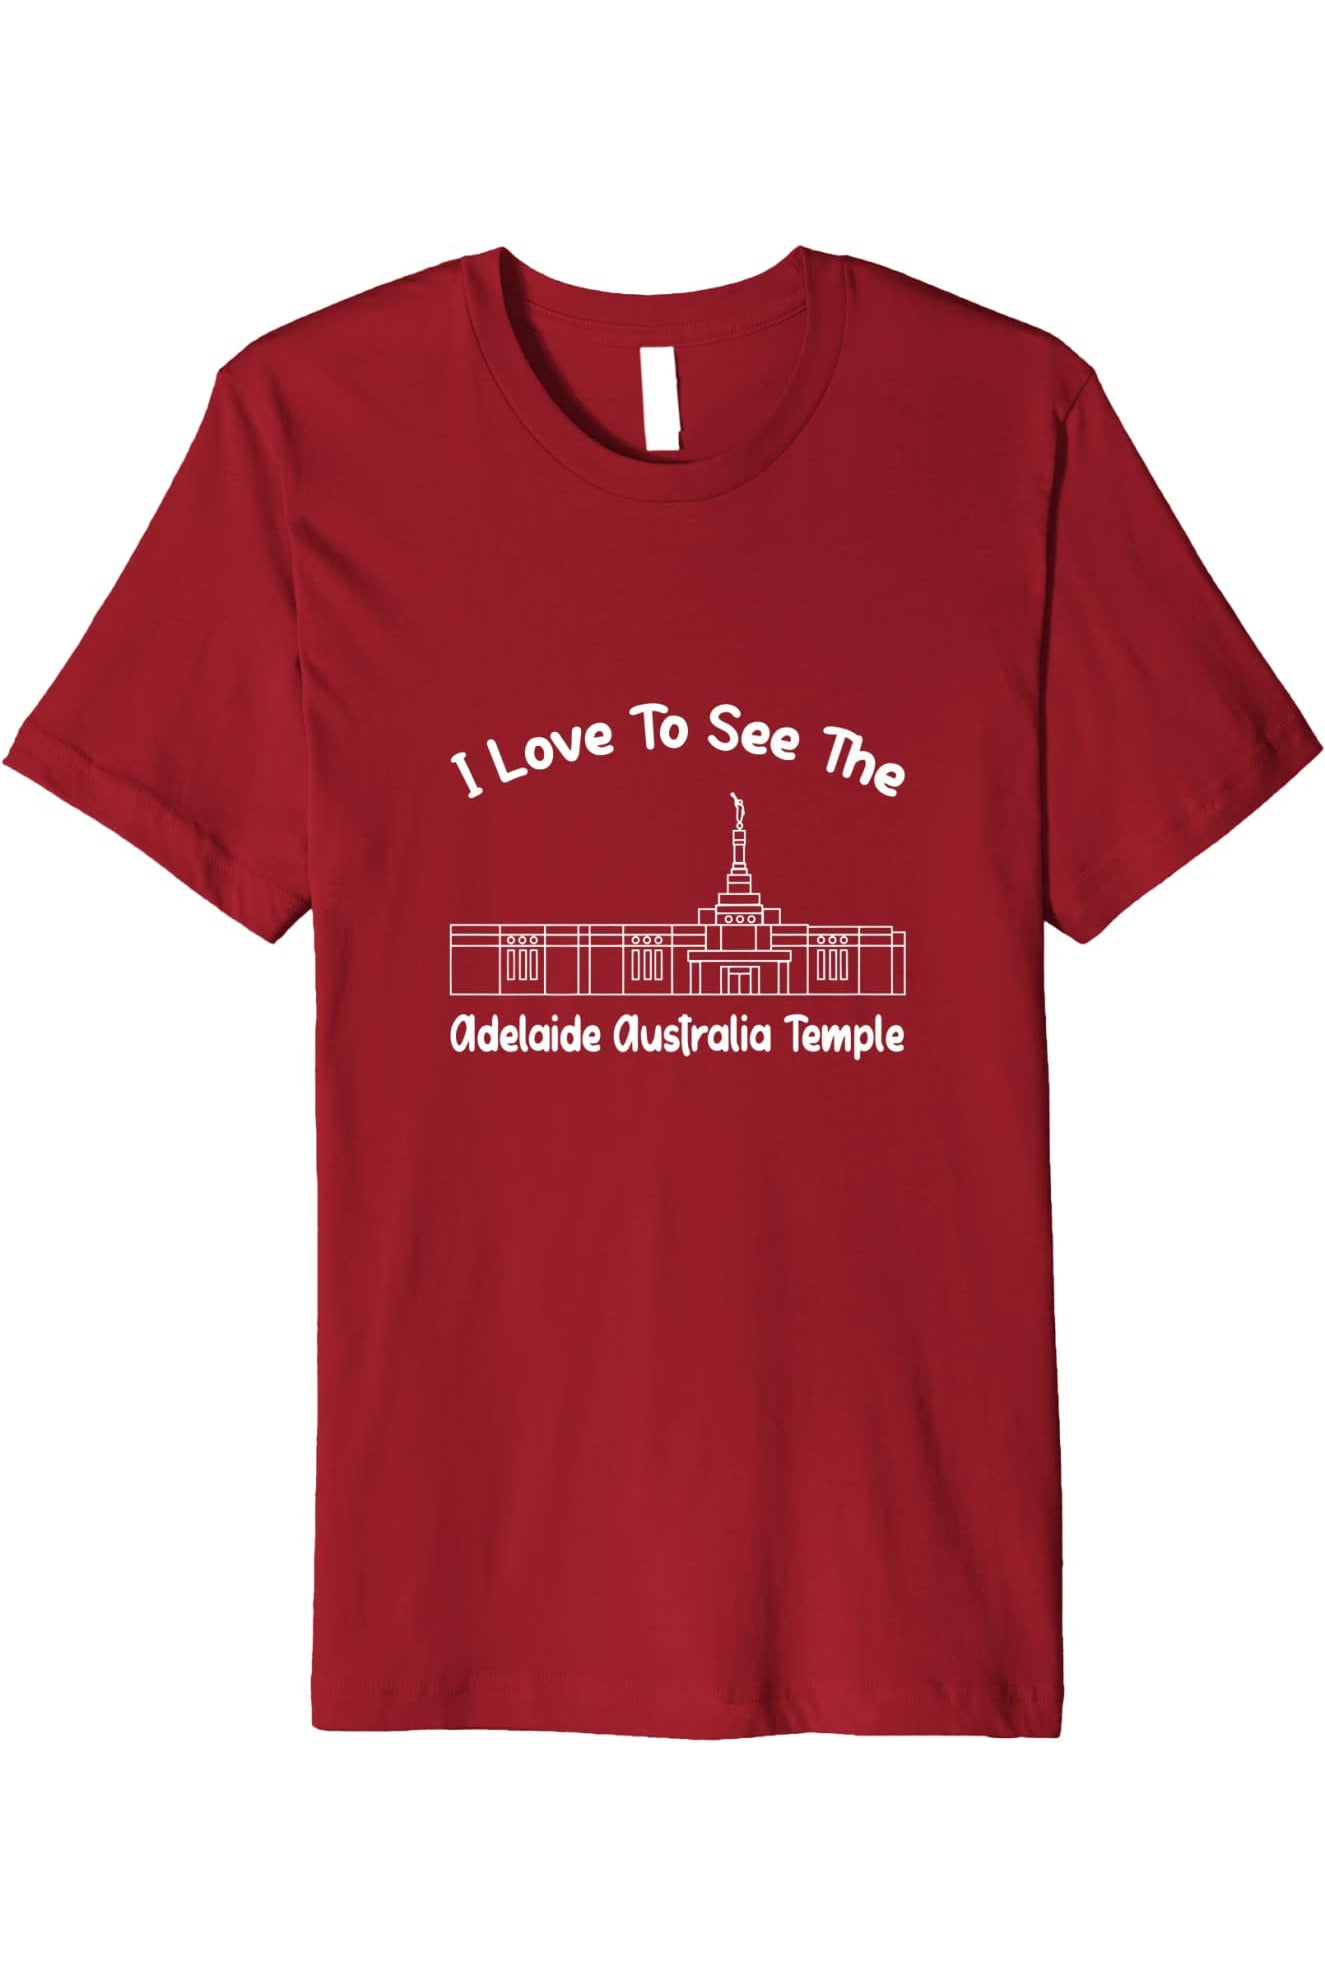 Adelaide Australia Temple T-Shirt - Premium - Primary Style (English) US